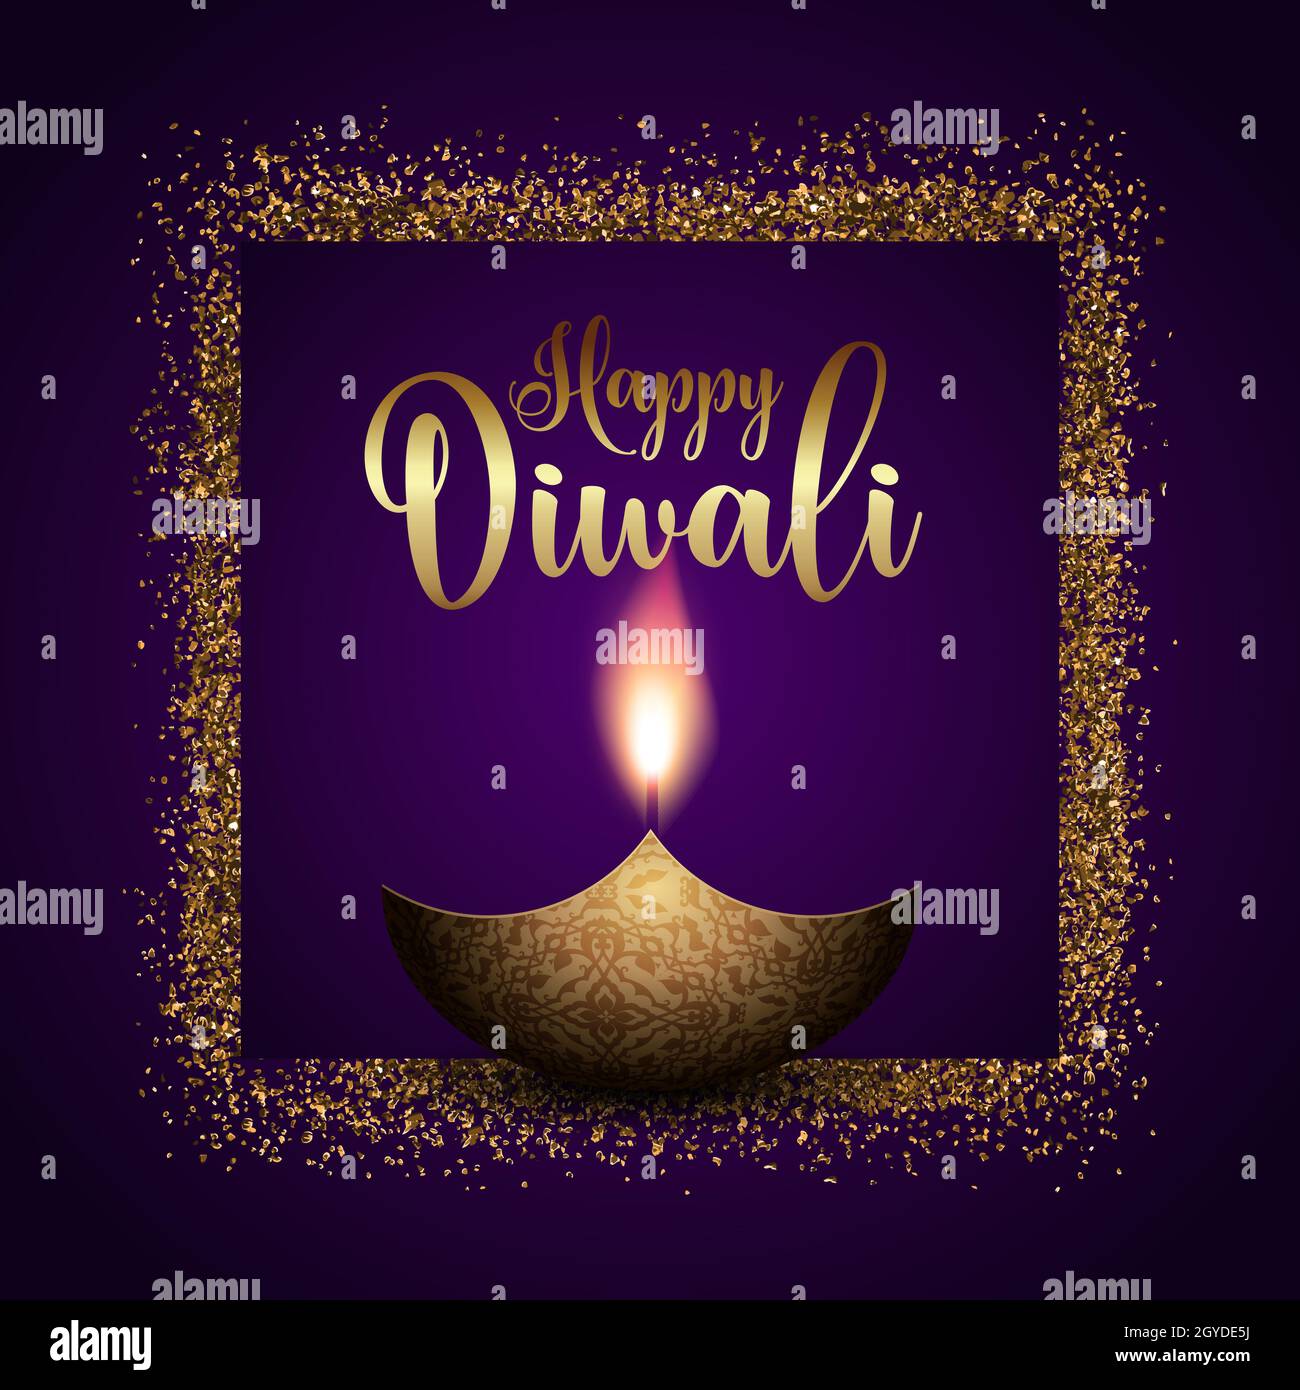 Happy Diwali background with gold glitter frame Stock Photo - Alamy